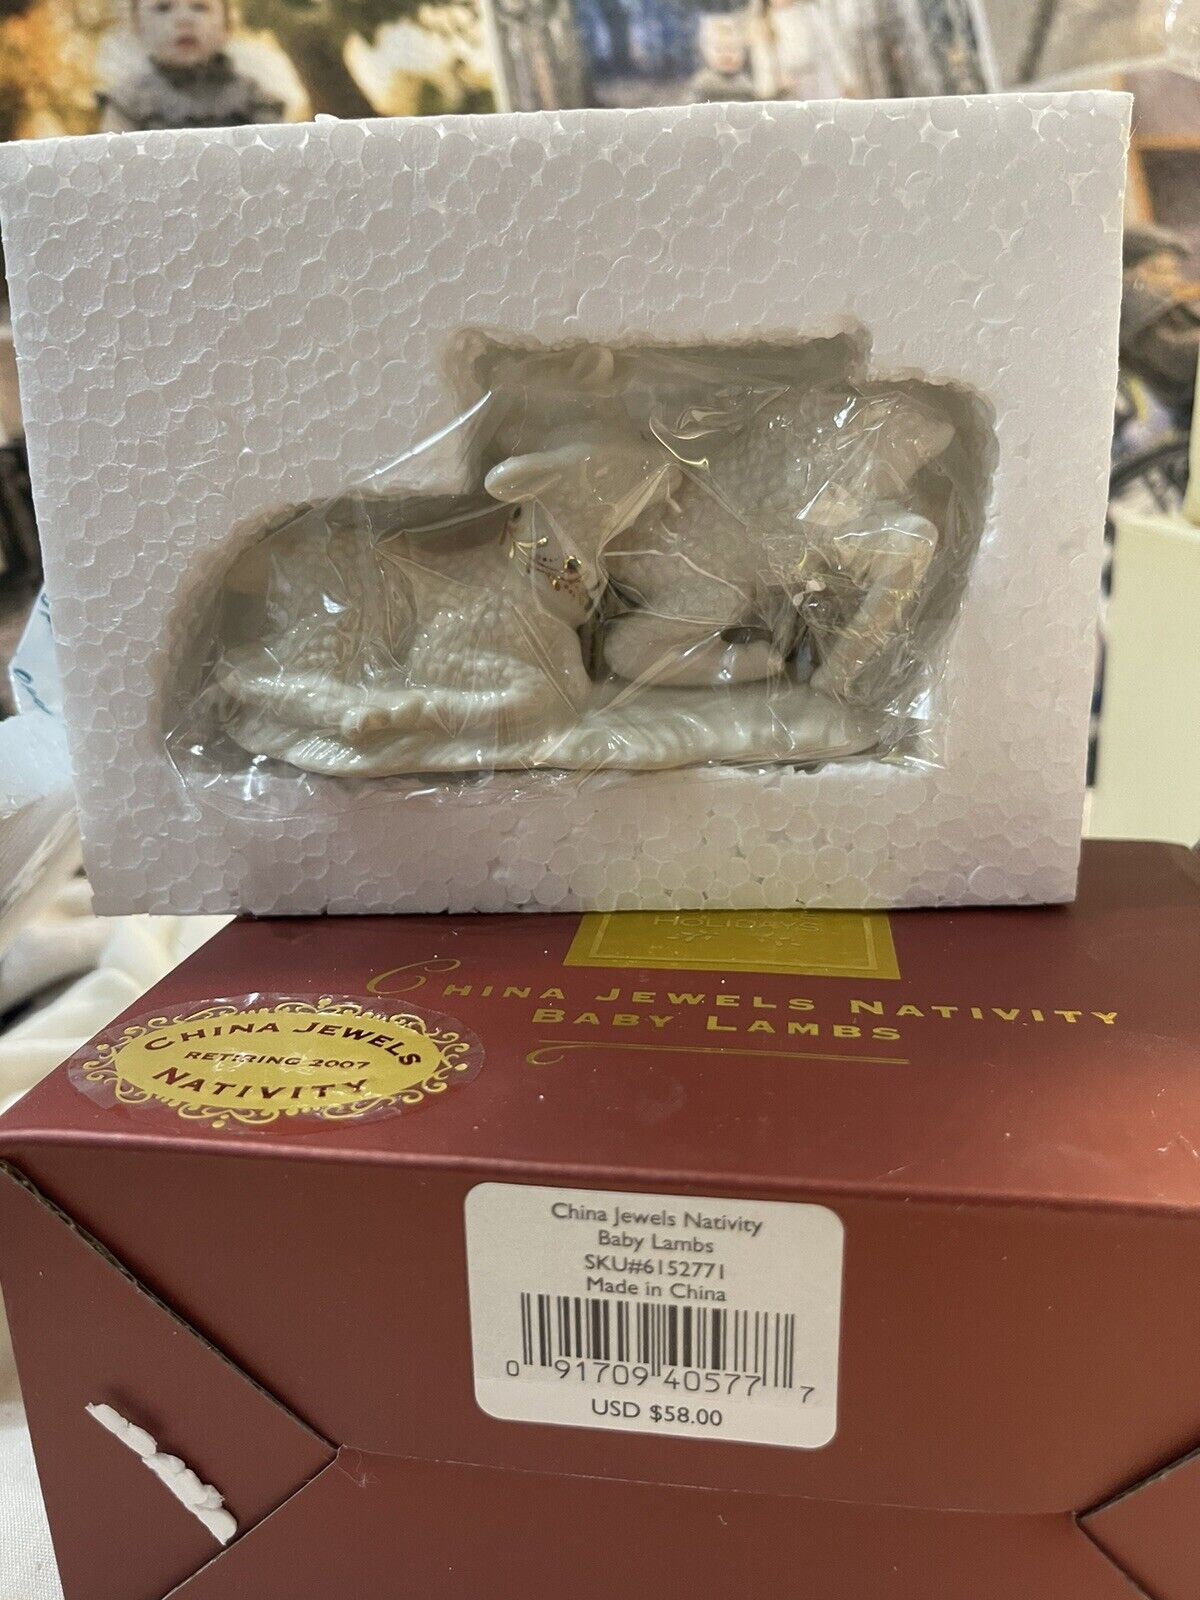 Lenox China Jewels Nativity Baby Lambs Sheep Porcelain Figurine Red Box USA